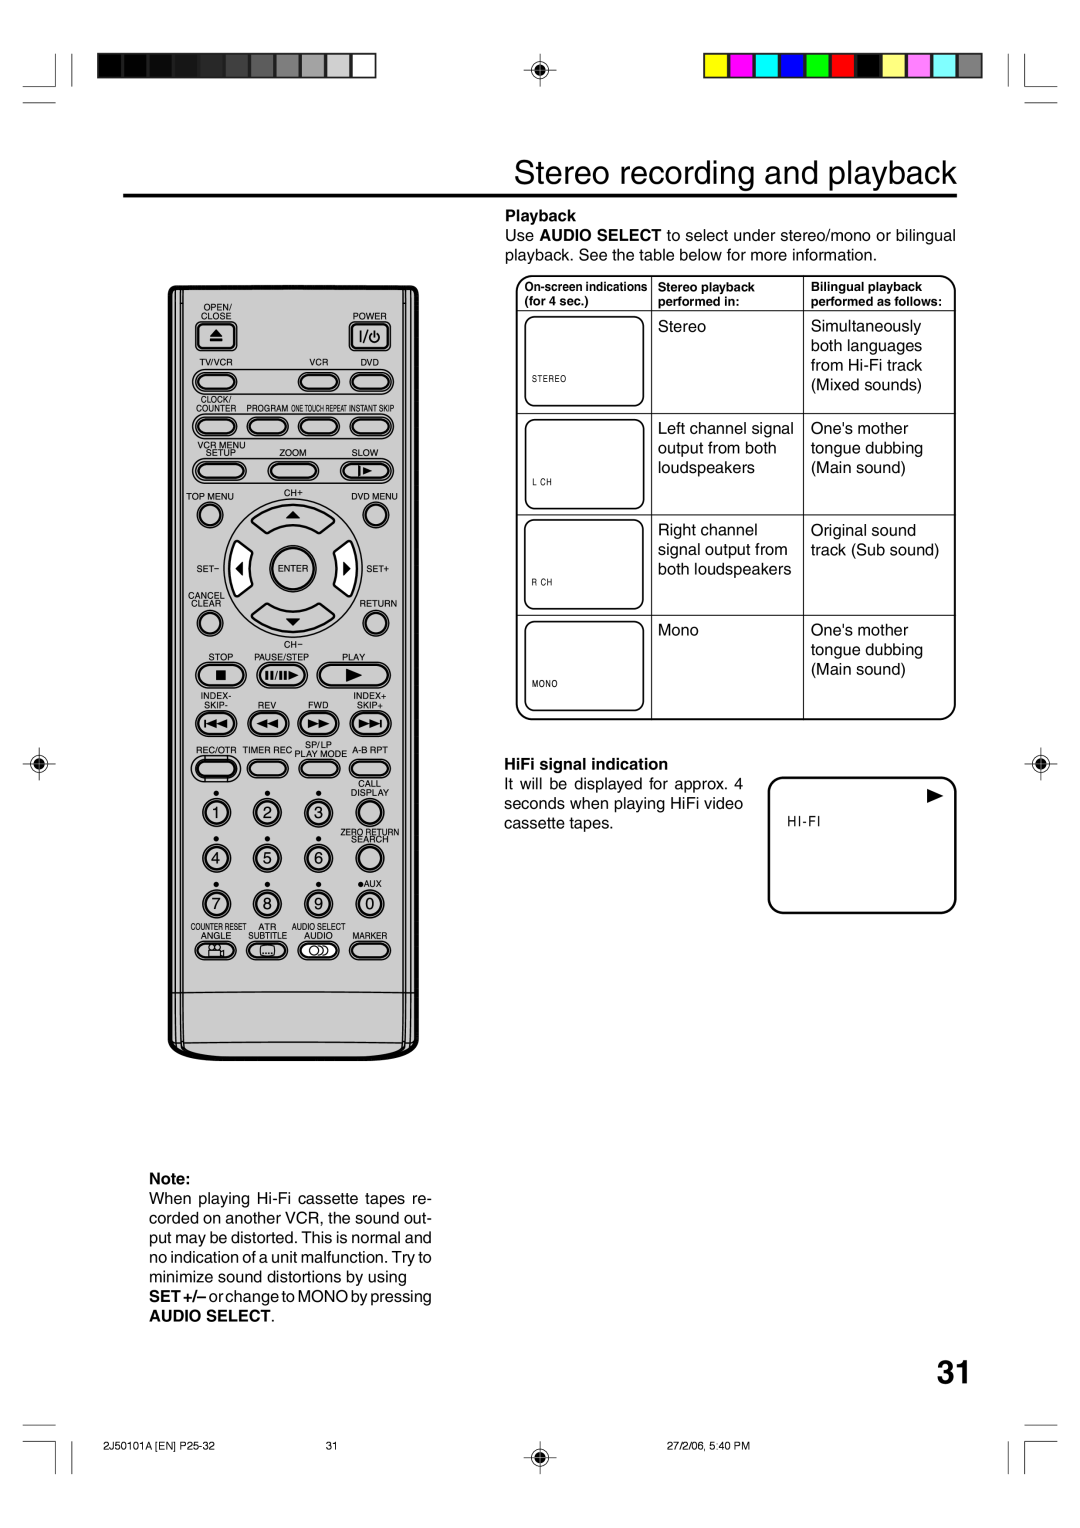 Toshiba SD-37VBSB manual Stereo recording and playback, Playback, HiFi signal indication, Audio Select 